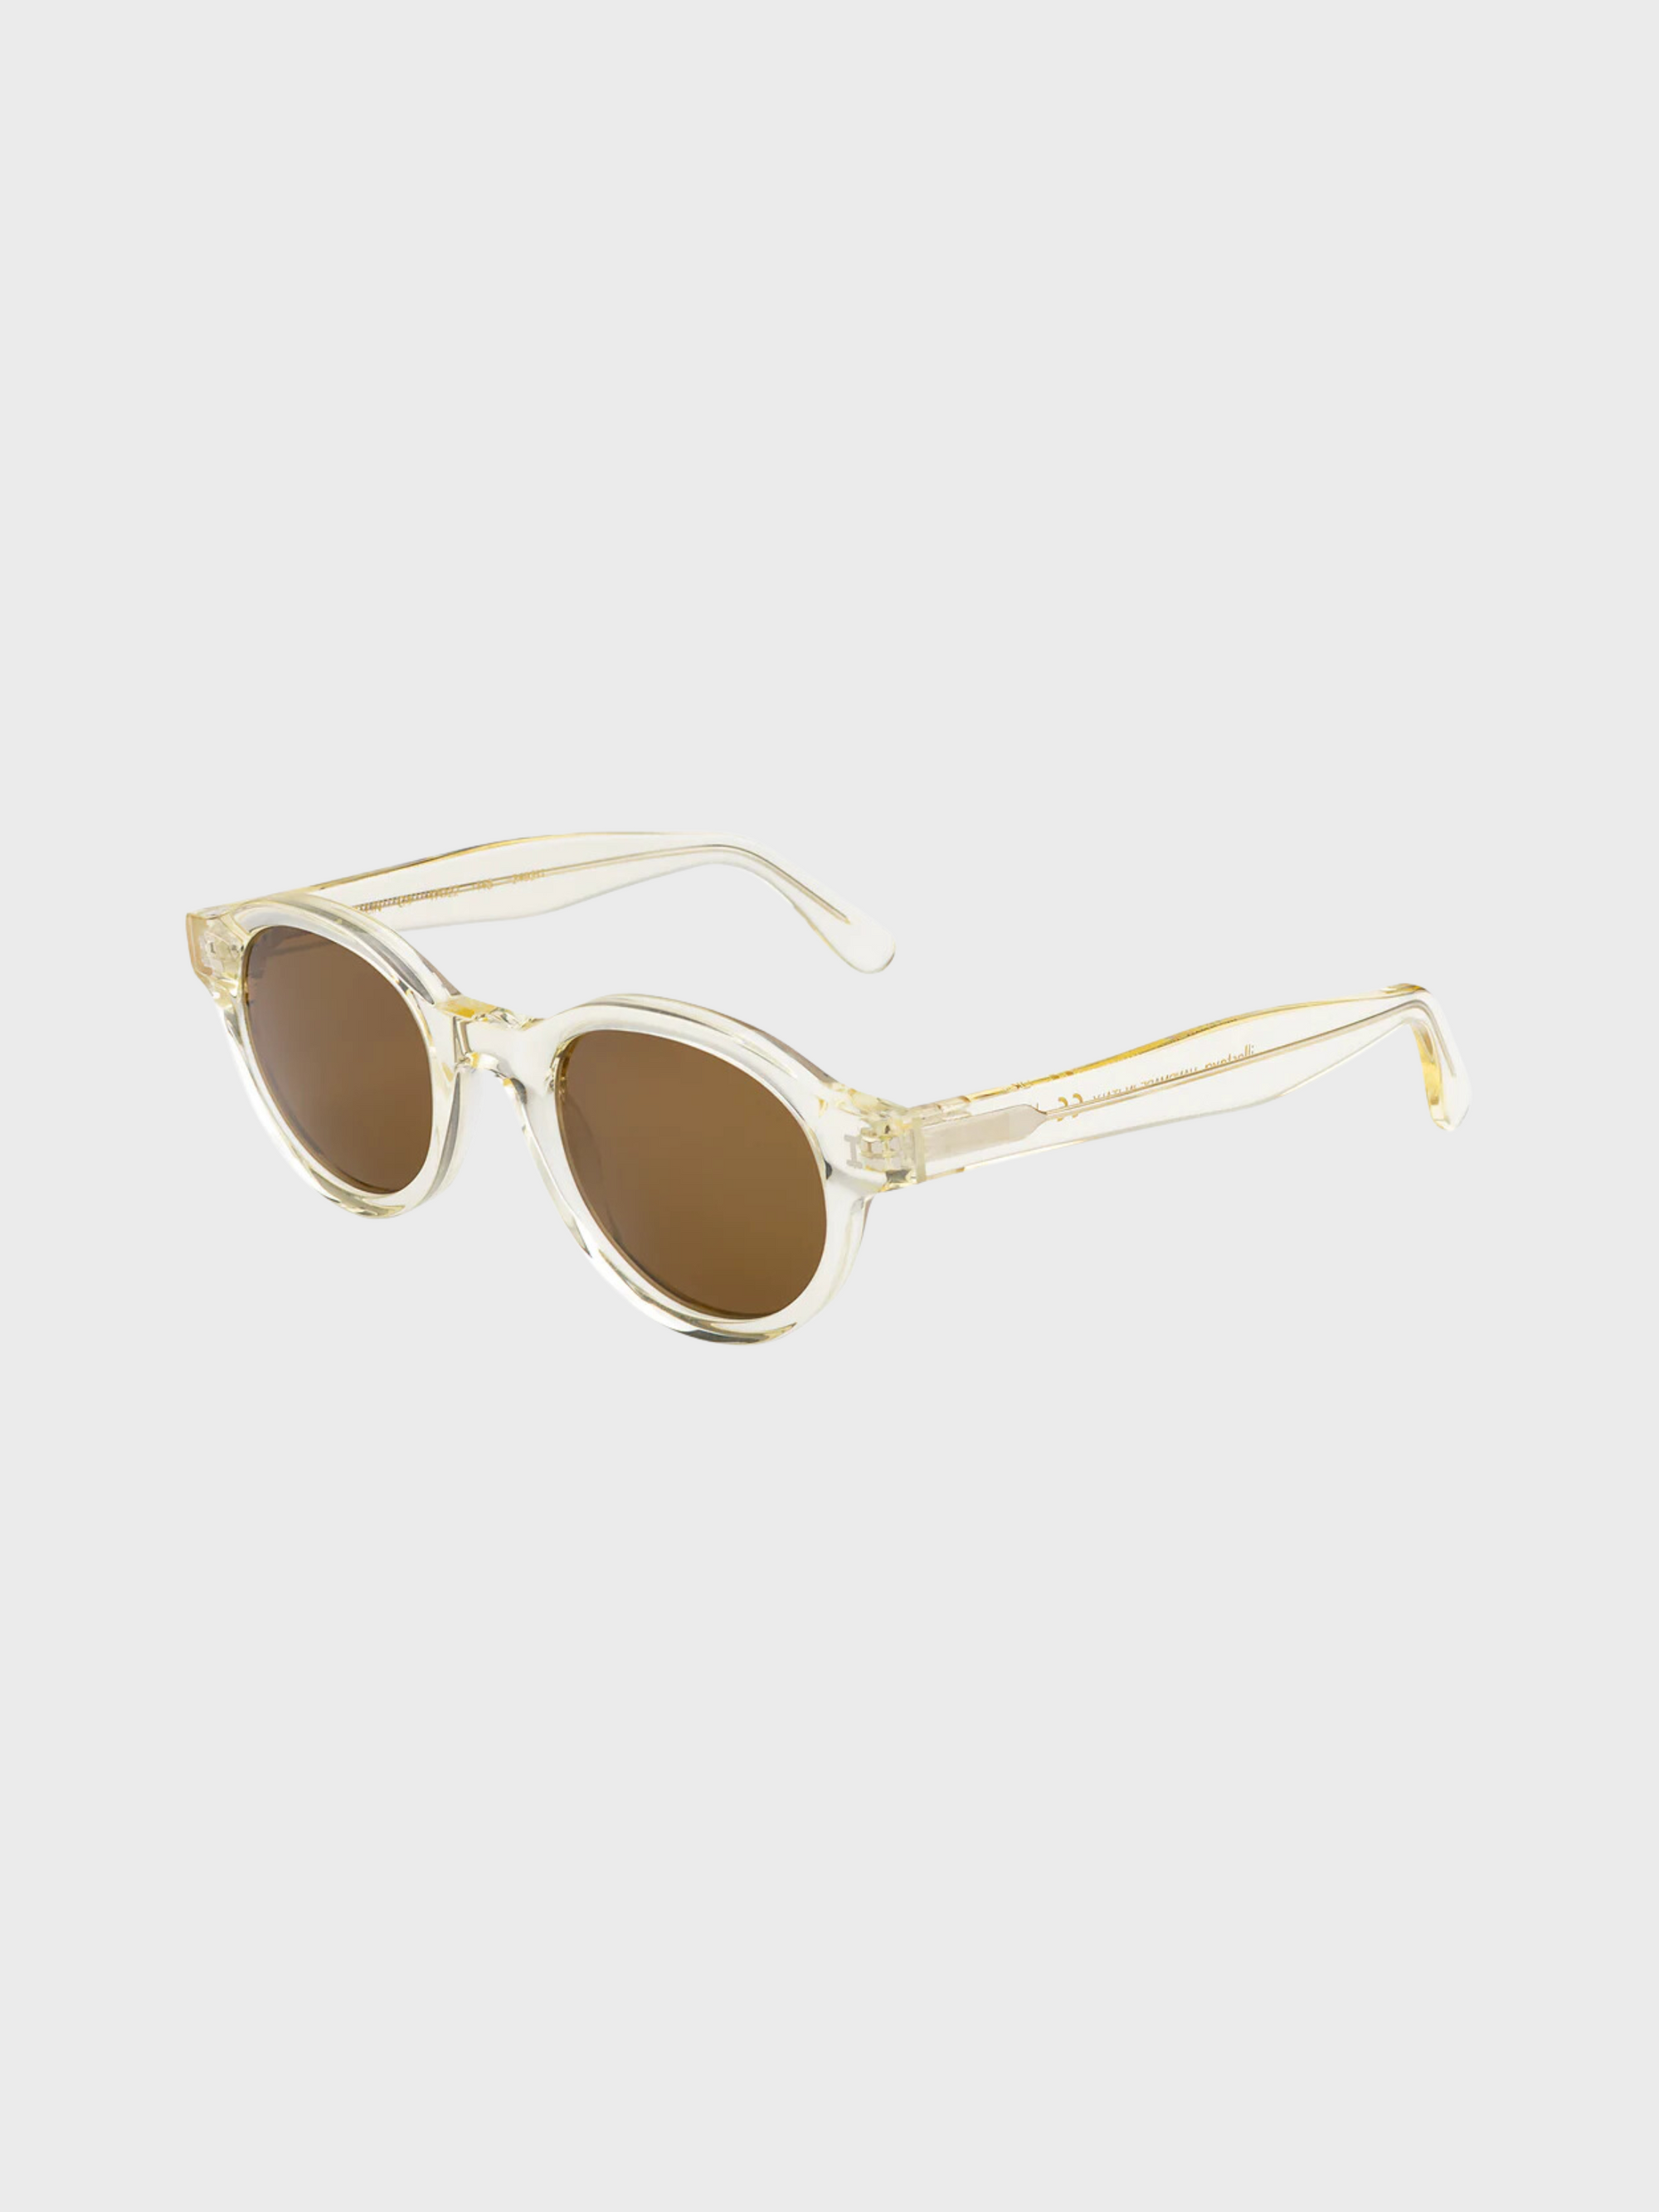 Illesteva Medellin Champagne Brown Lense Sunglasses-Accessories-West of Woodward Boutique-Vancouver-Canada